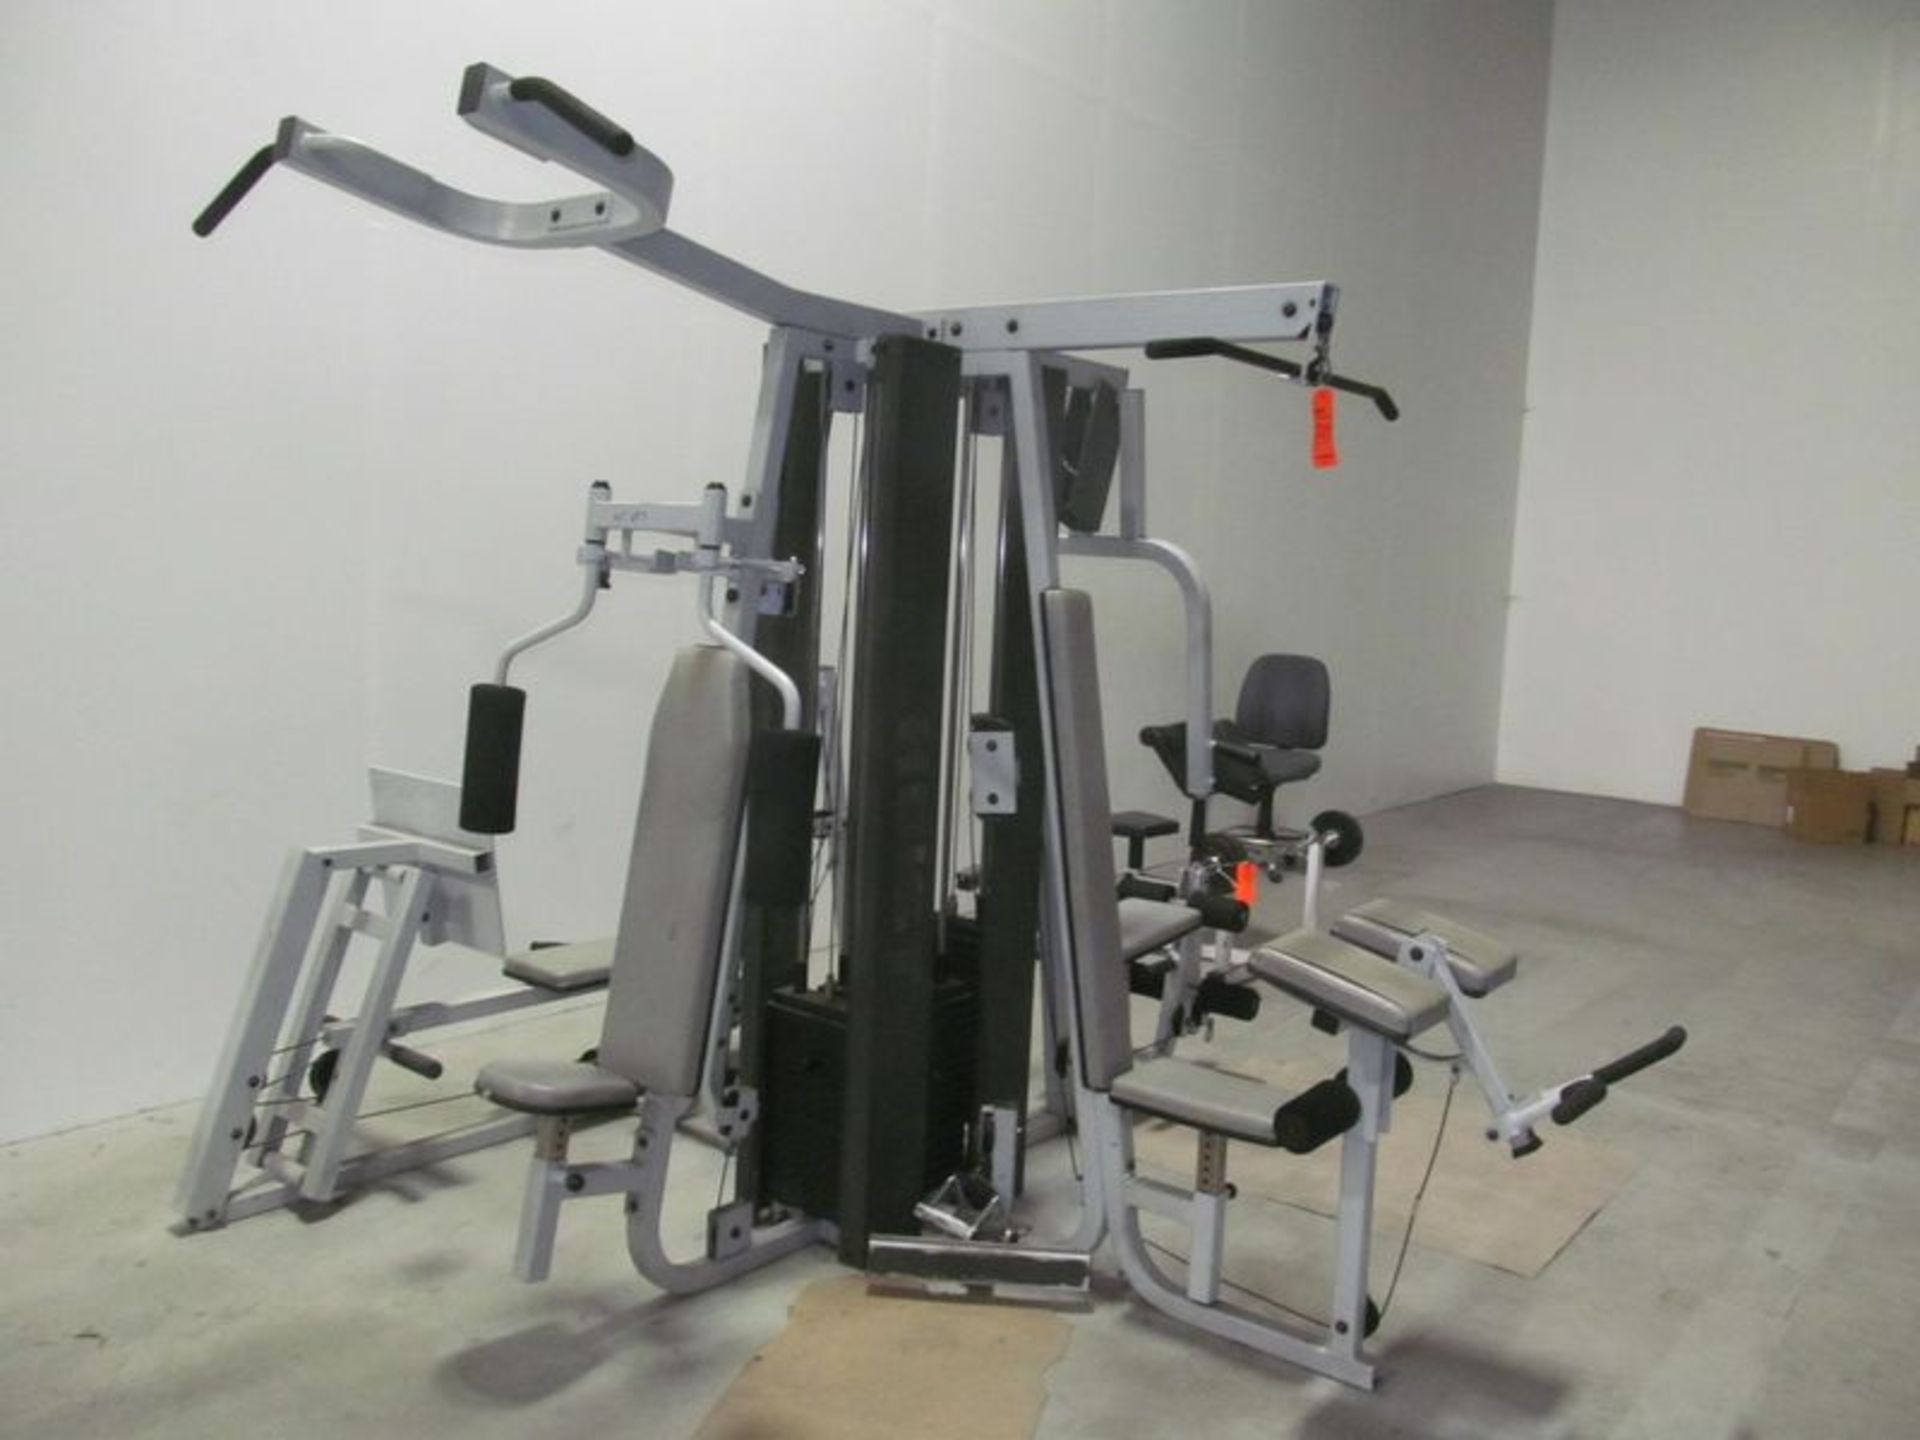 Hoist Fitness System #0-2706, 4-station universal gym - Image 2 of 3